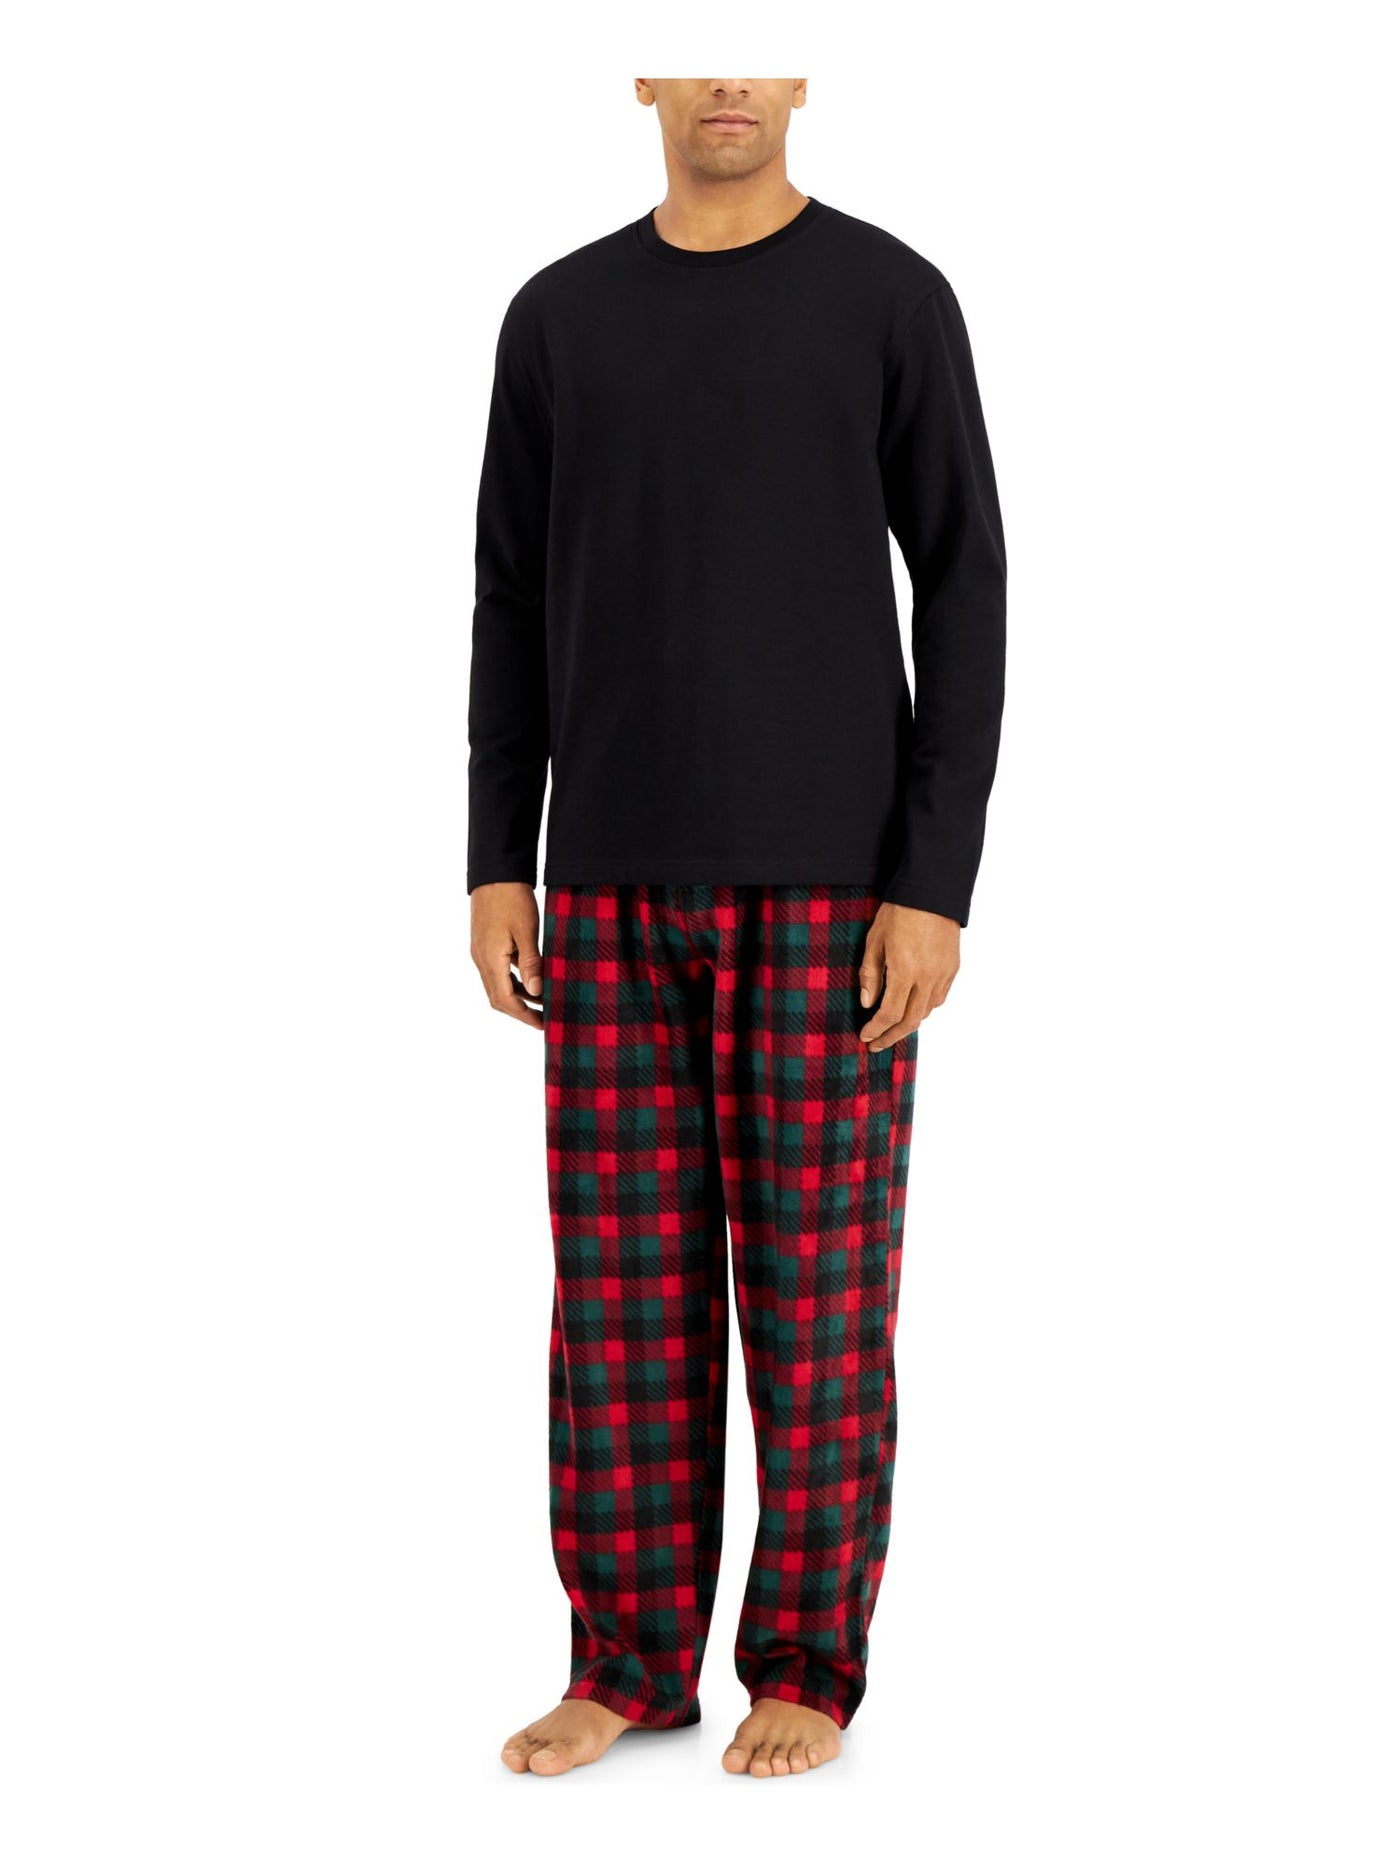 CLUBROOM Intimates 2 Pack Black Fleece Plaid Pajamas L